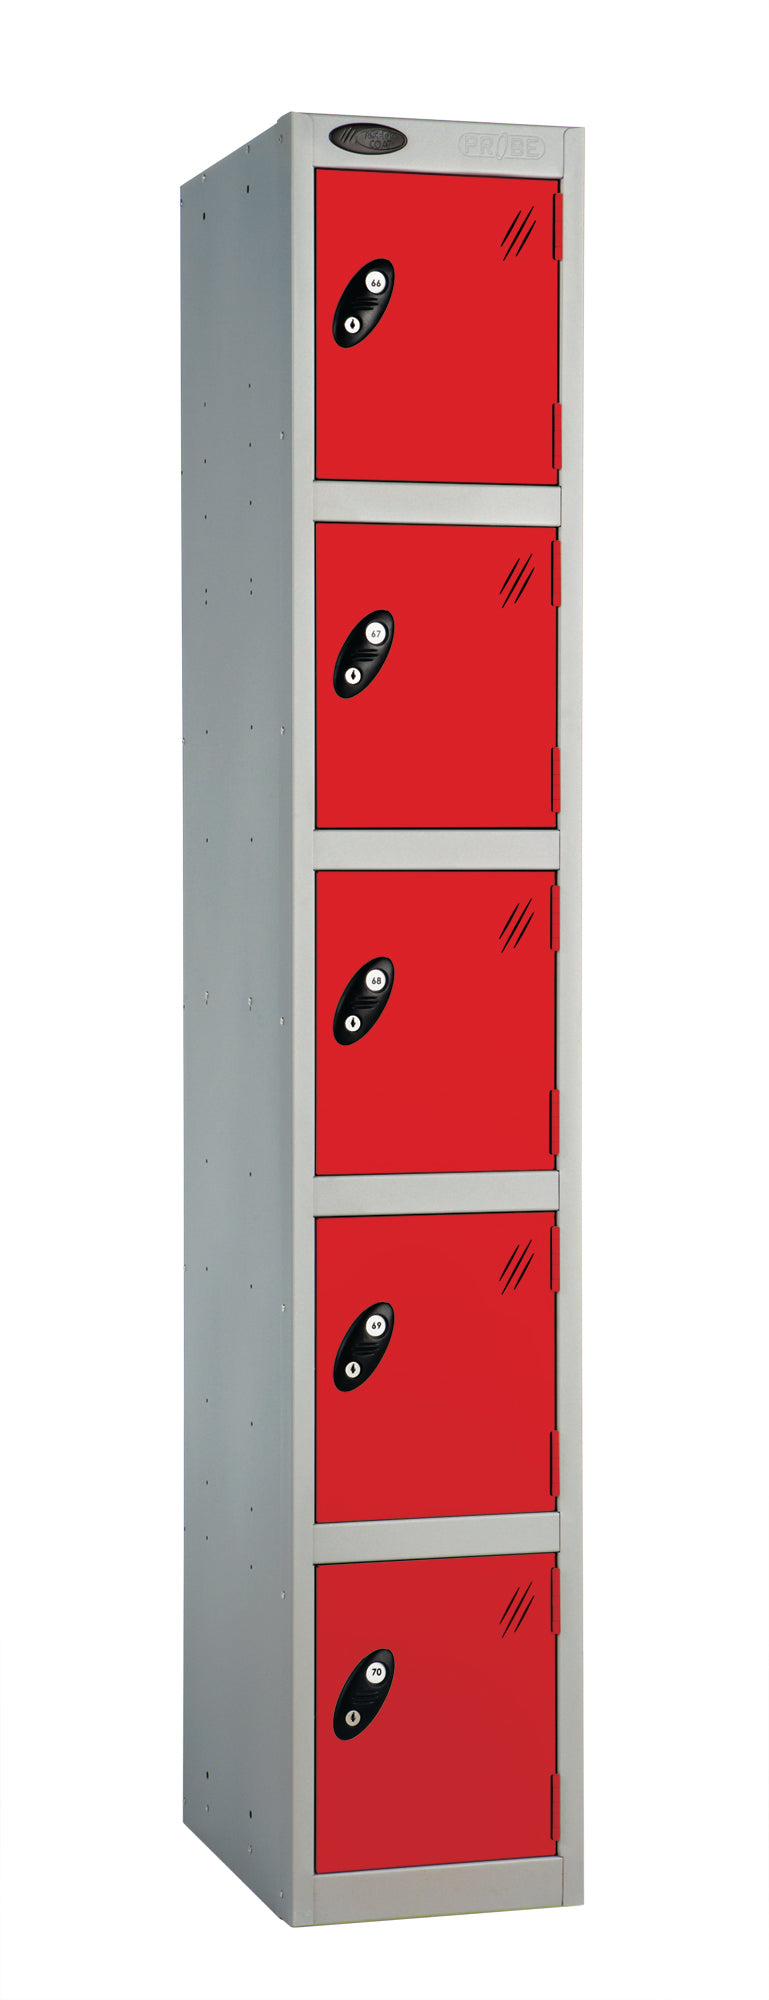 PROBEBOX STANDARD 1 NEST STEEL LOCKERS - FLAME RED 5 DOOR Storage Lockers > Lockers > Cabinets > Storage > Probe > One Stop For Safety   